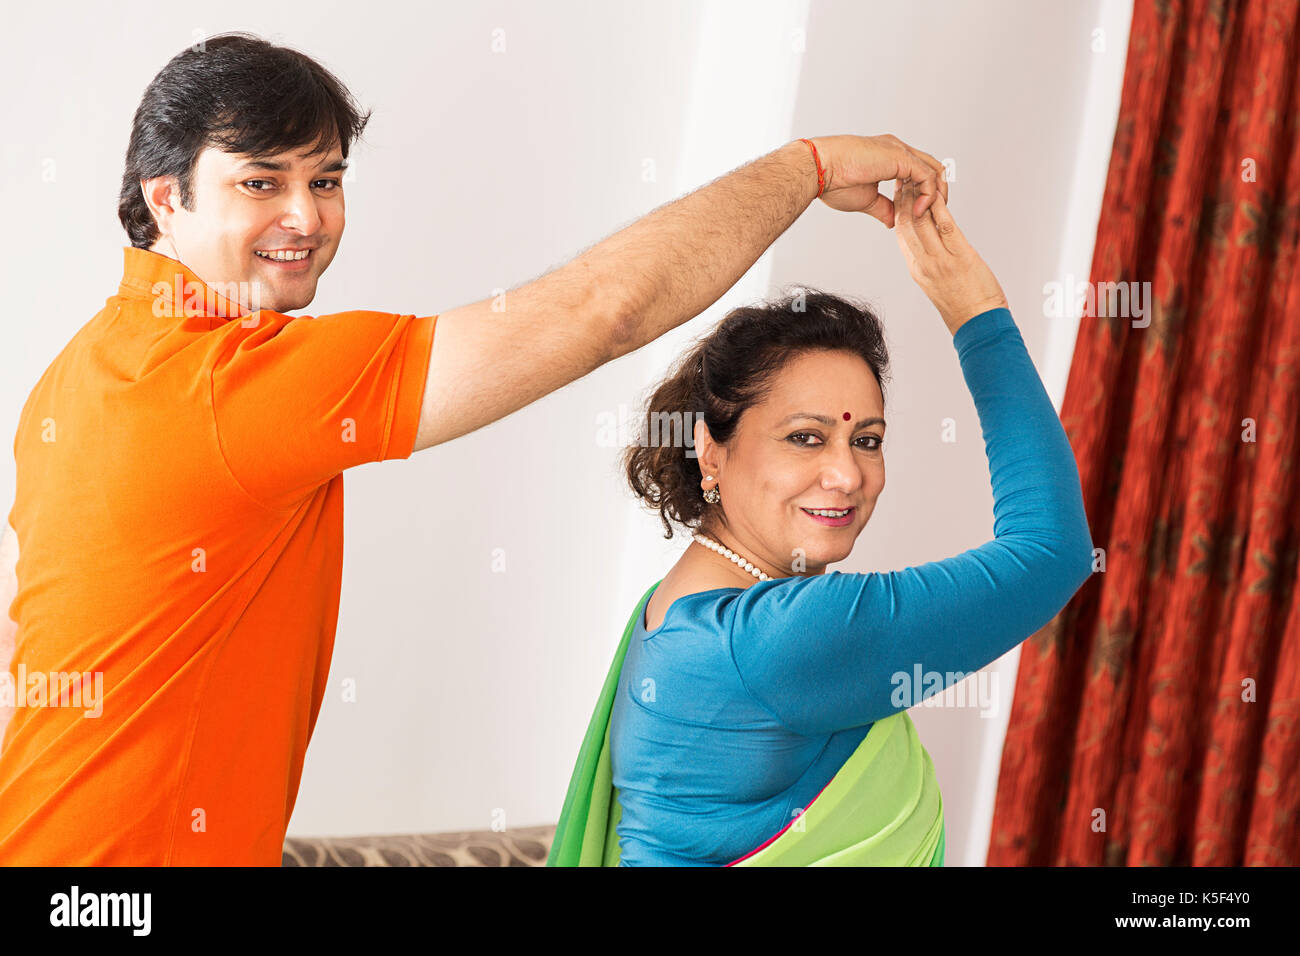 Adult Son And Senior Mother Dancing Rotating Having fun at home Stock Photo